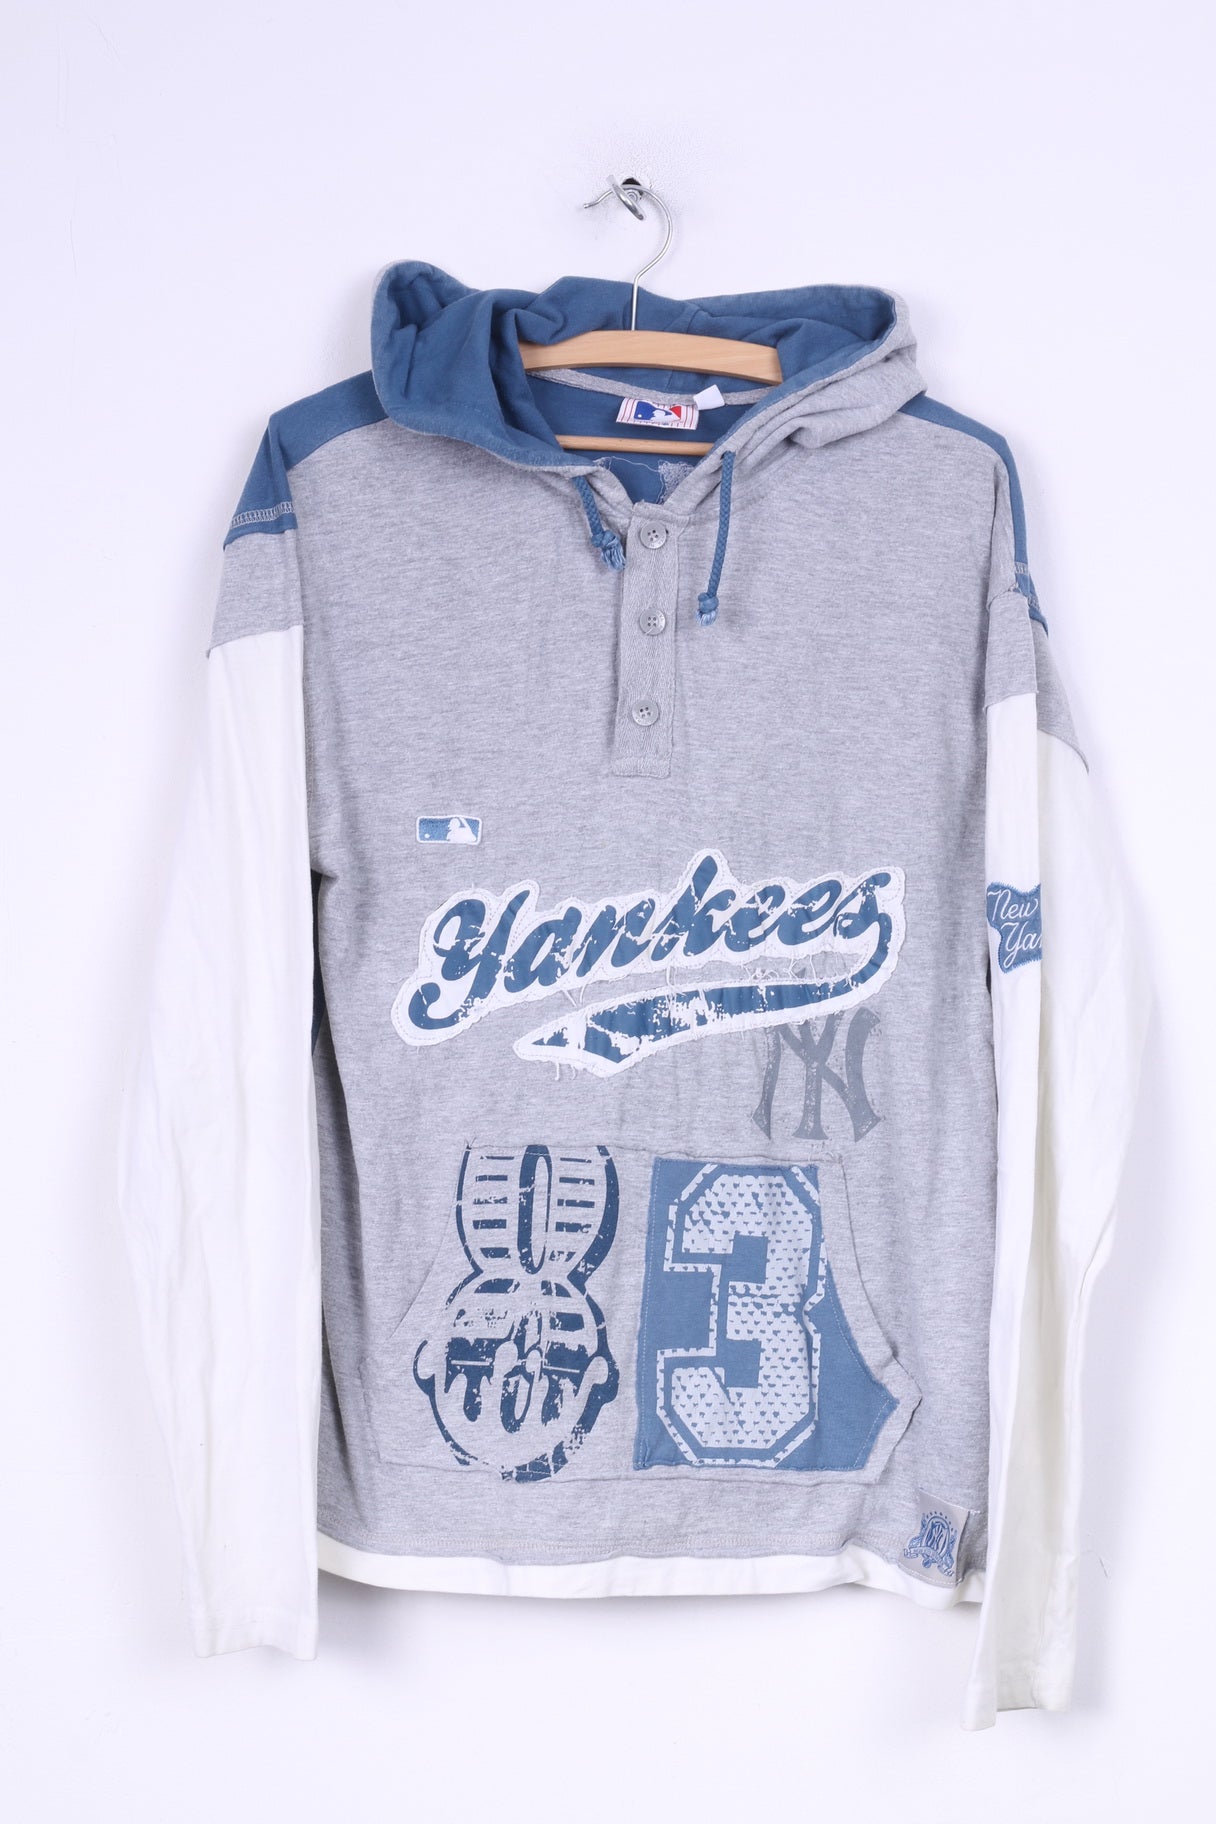 Major League Baseball Mens M Sweatshirt Hooded Grey Sport Cotton Yankees